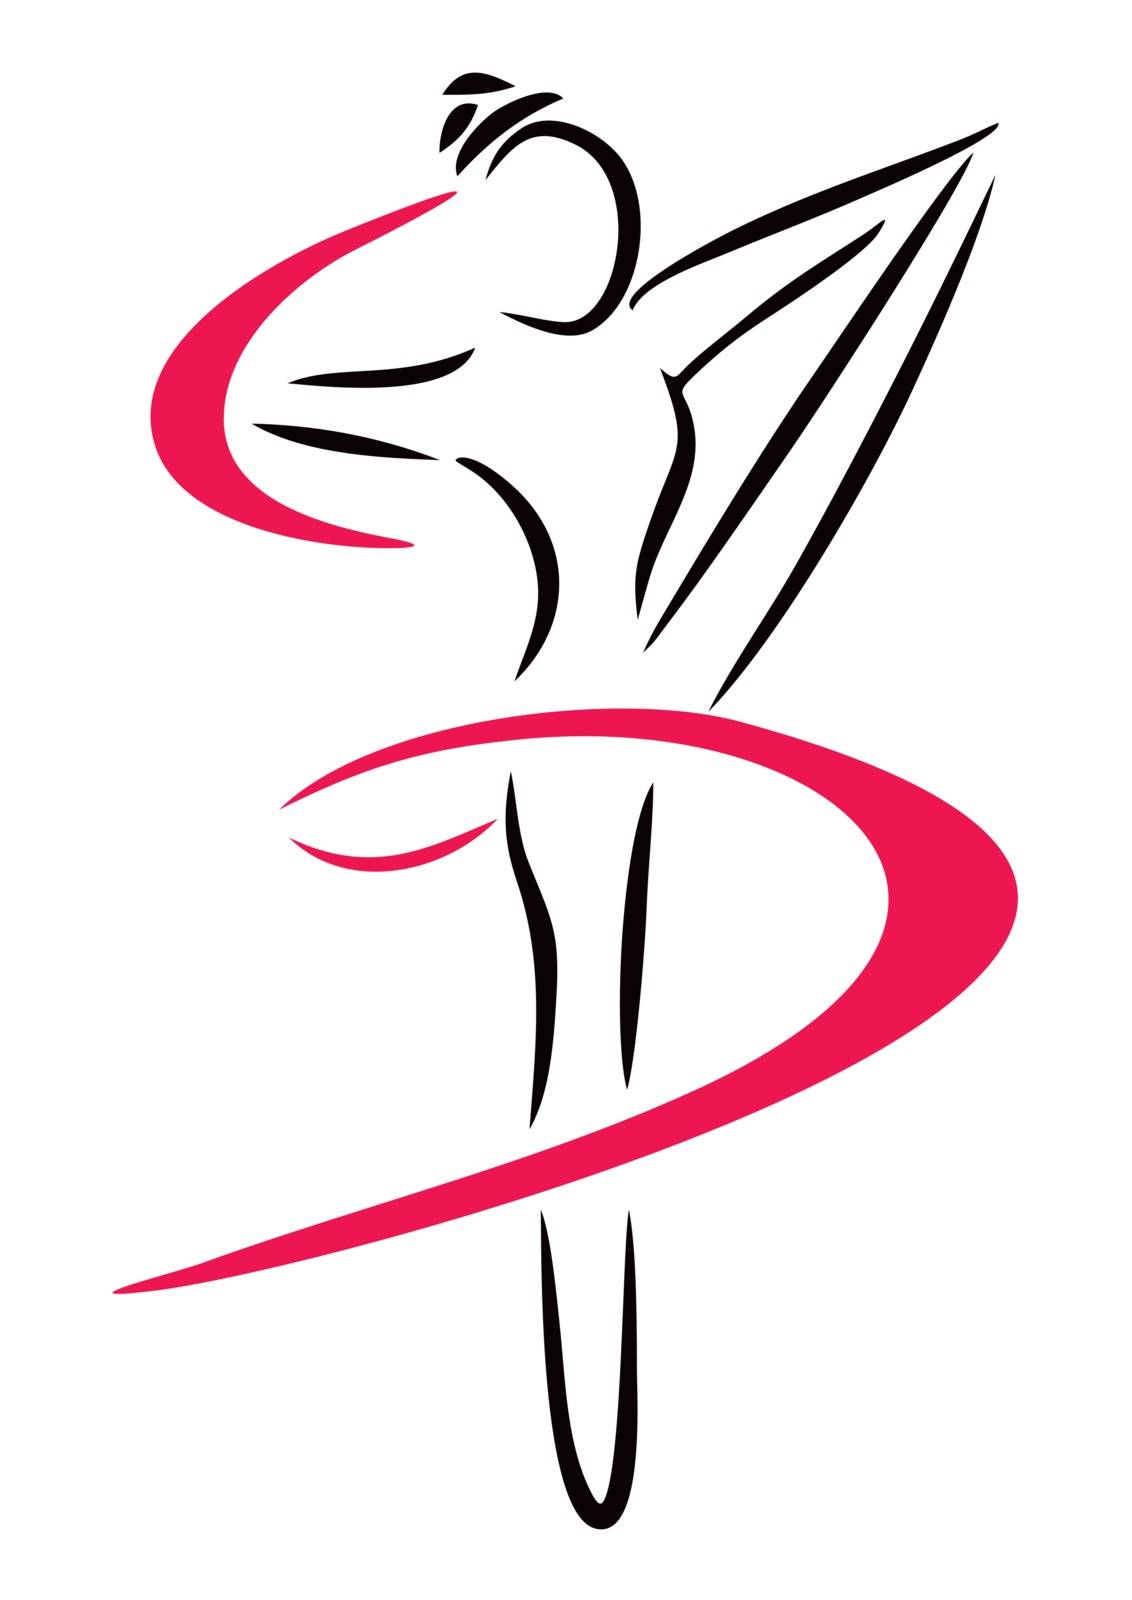 Symbol of woman dancing with ribbon